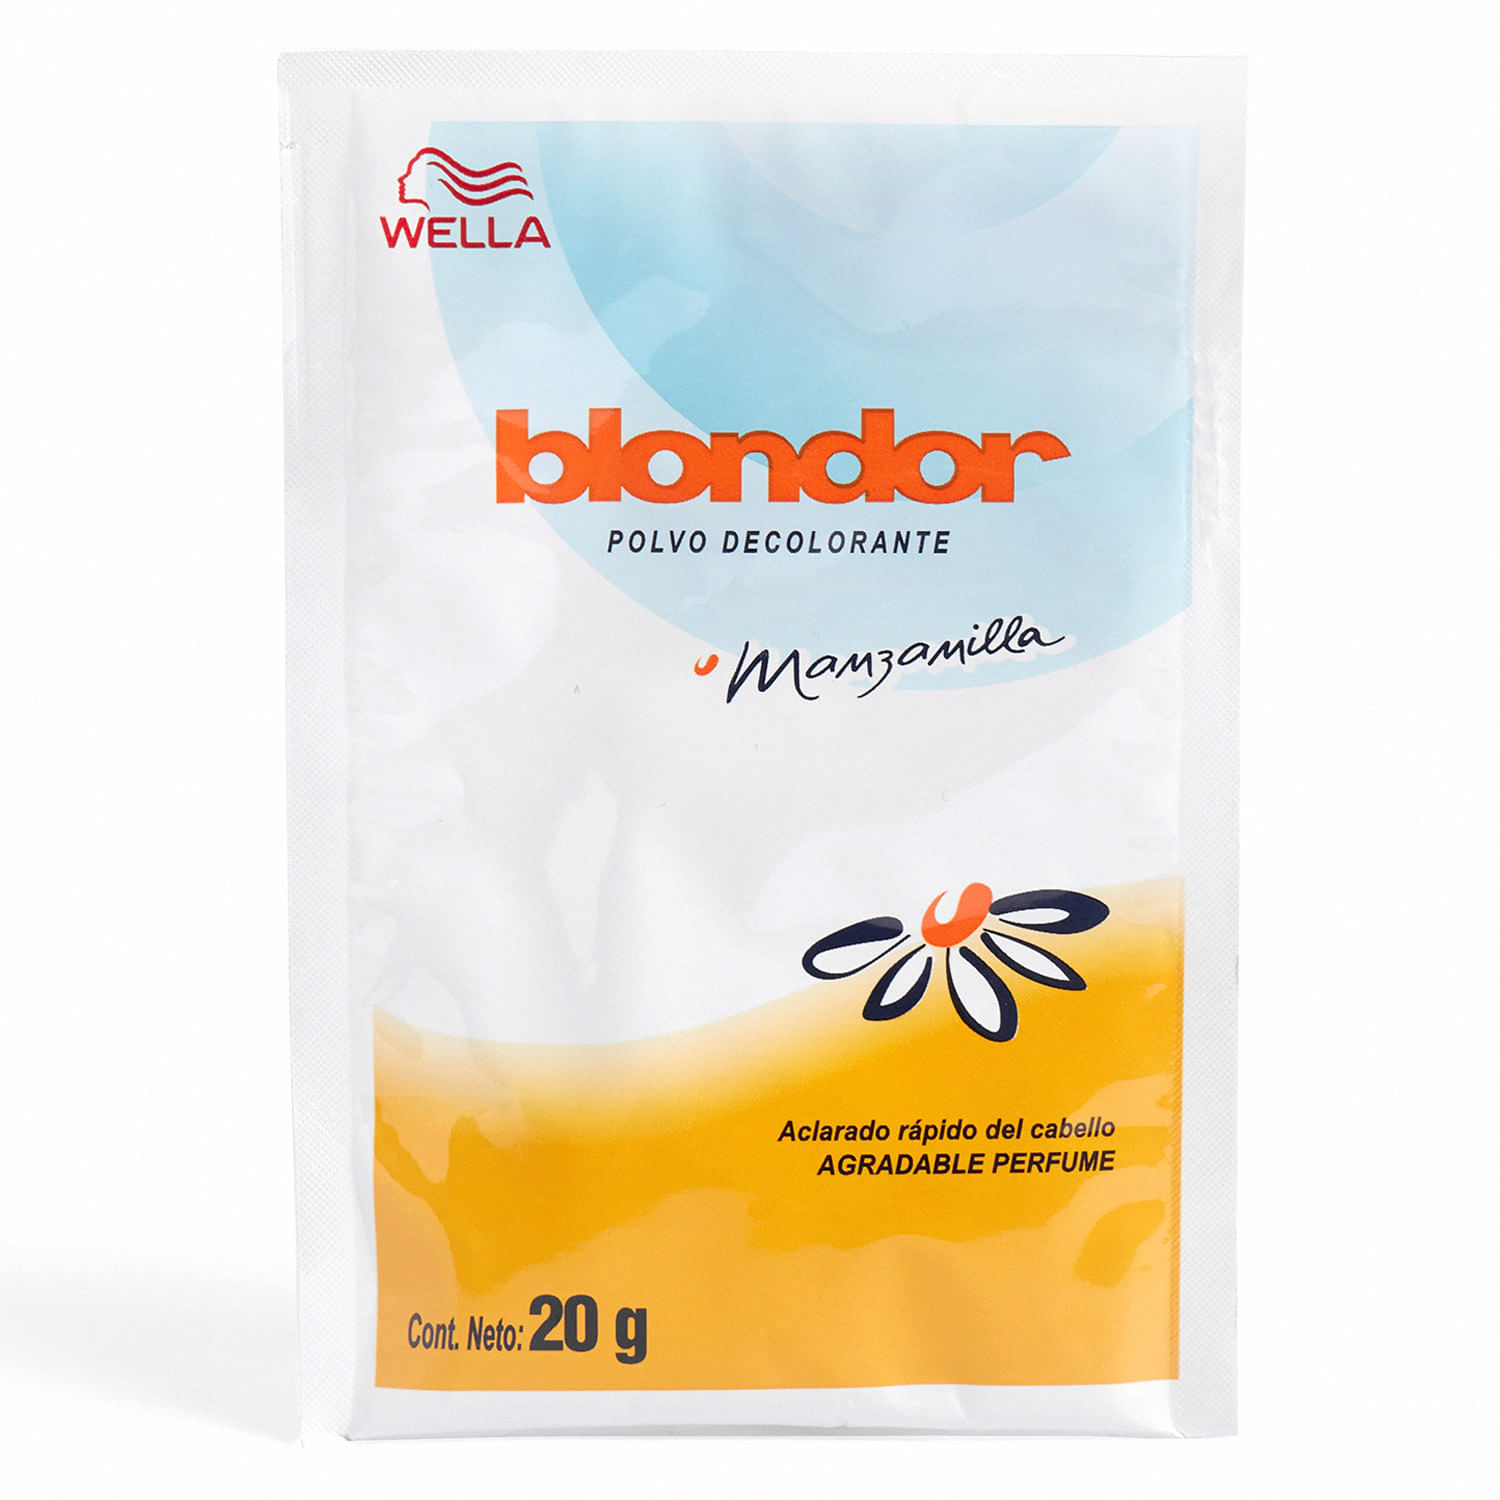 Decolorante Blondor Manzanilla 20 g